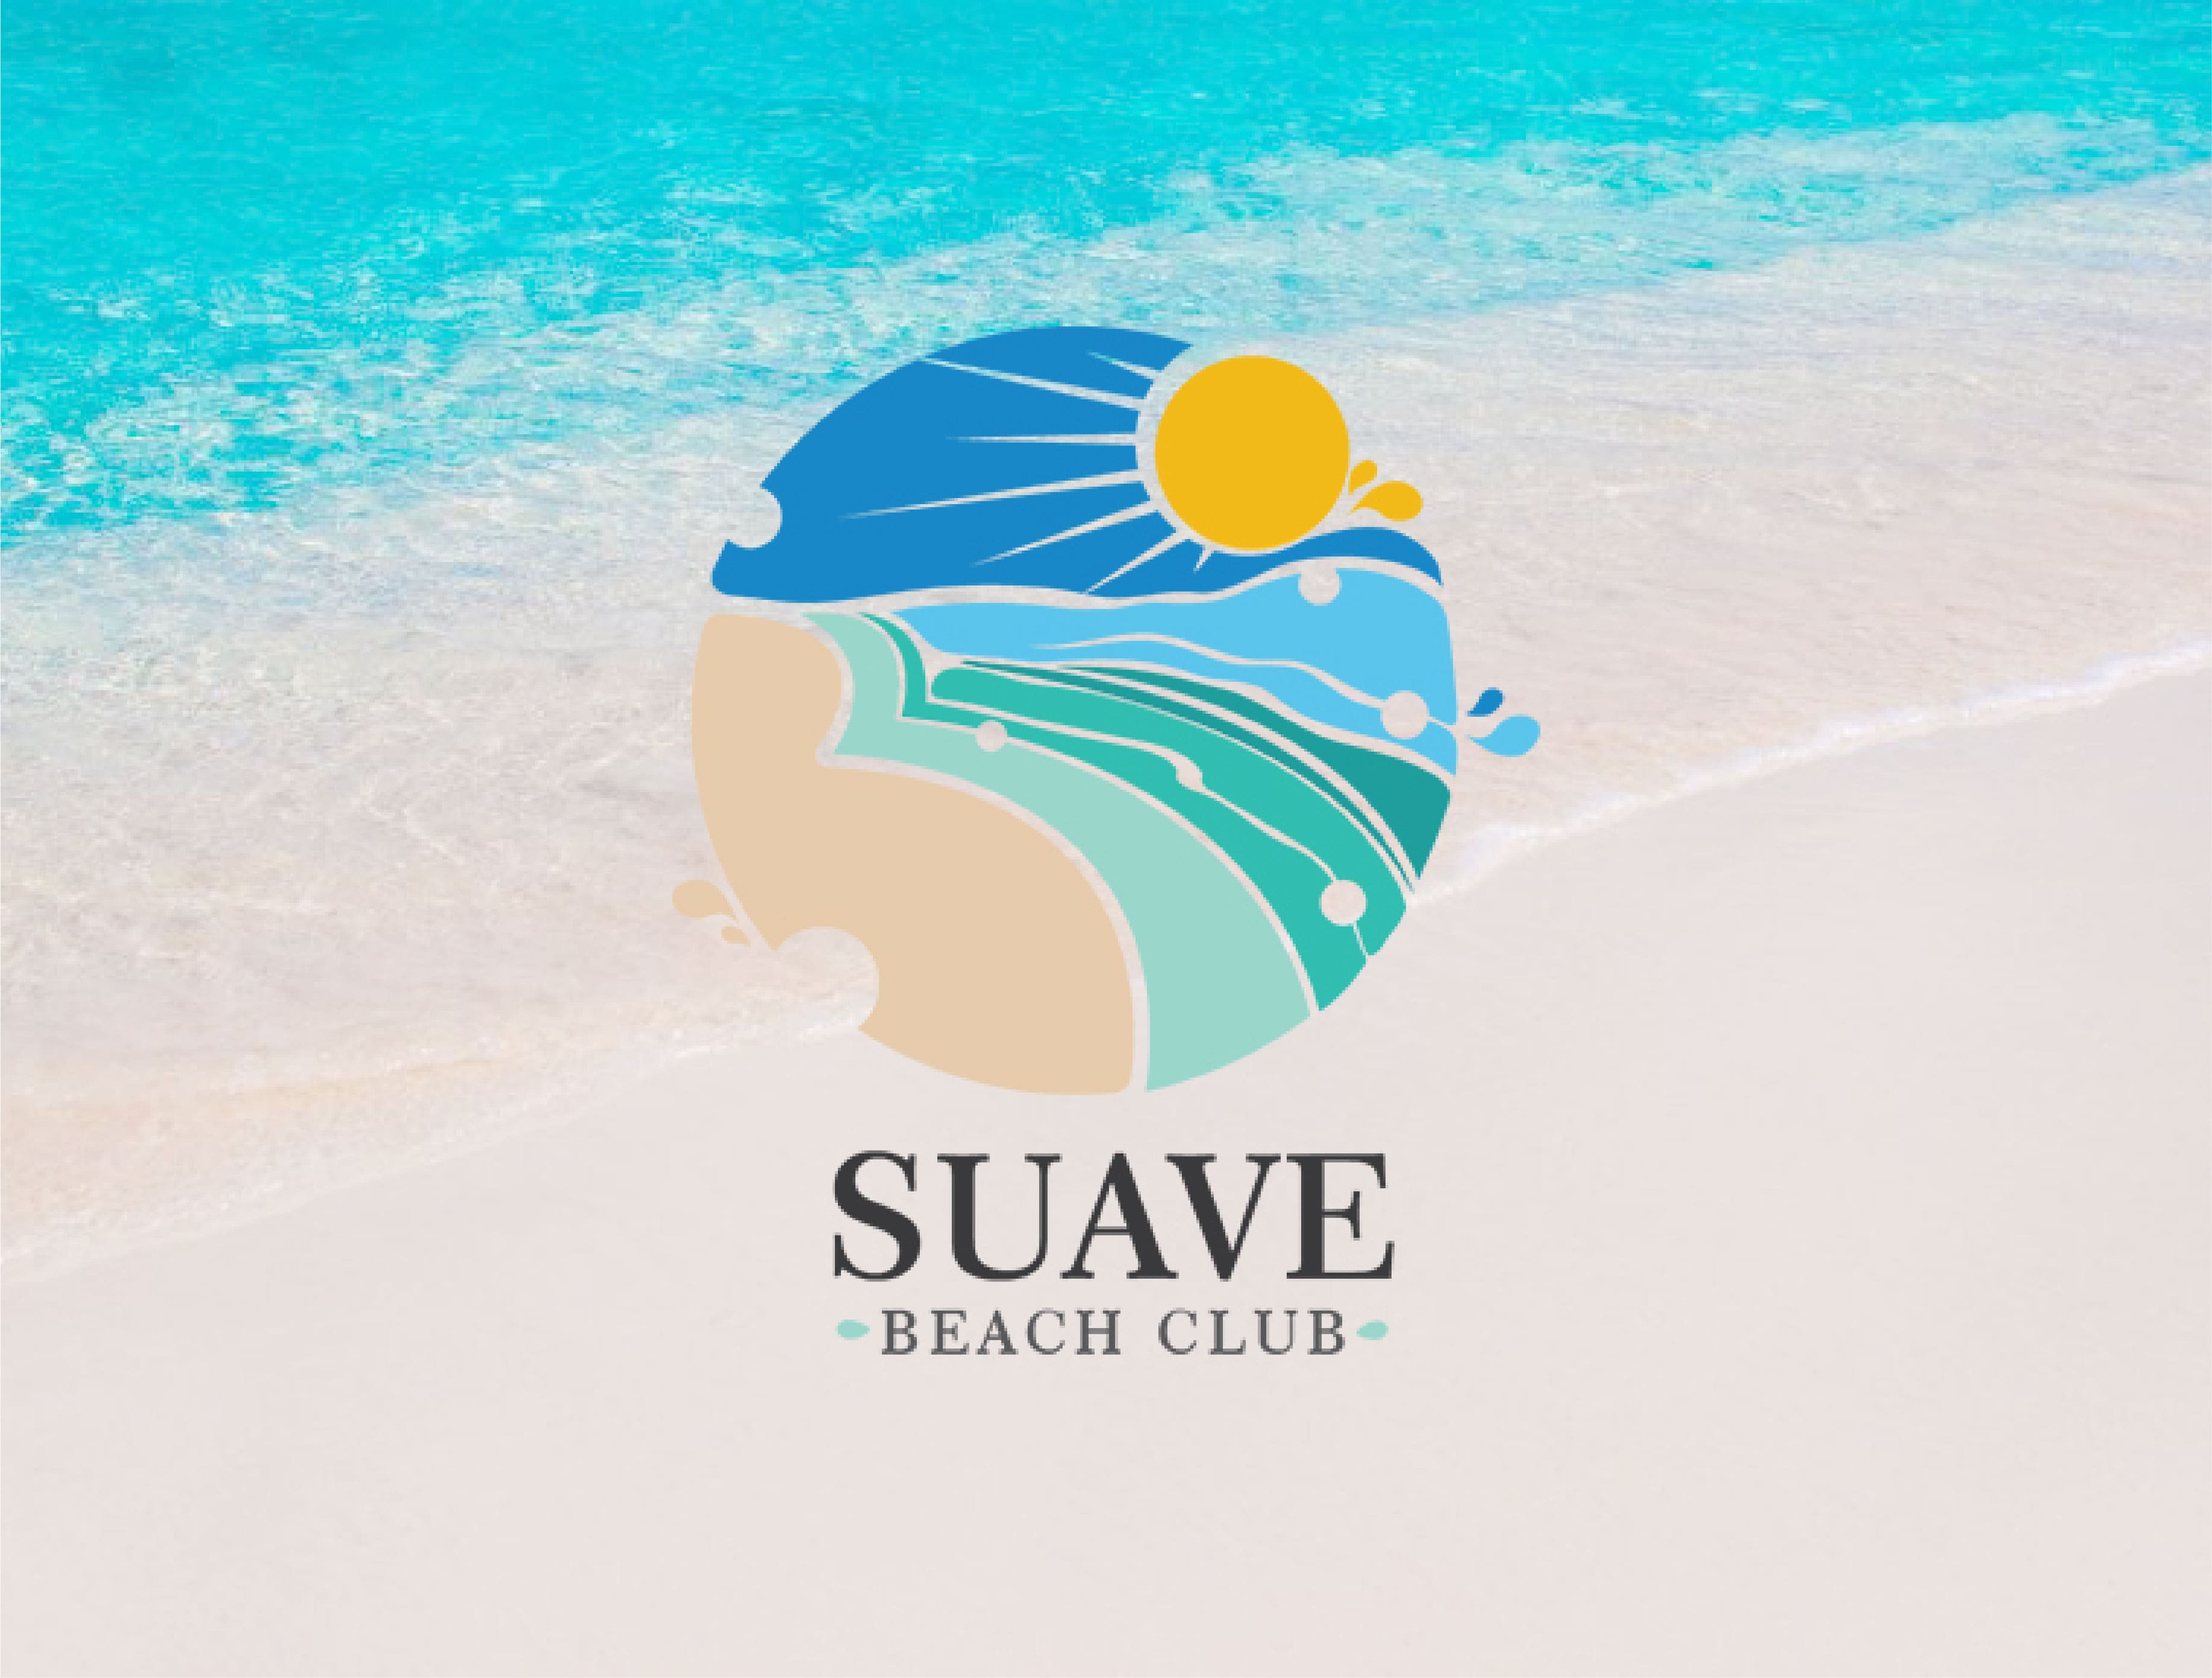 Customize 560+ Beach Logo Templates Online - Canva